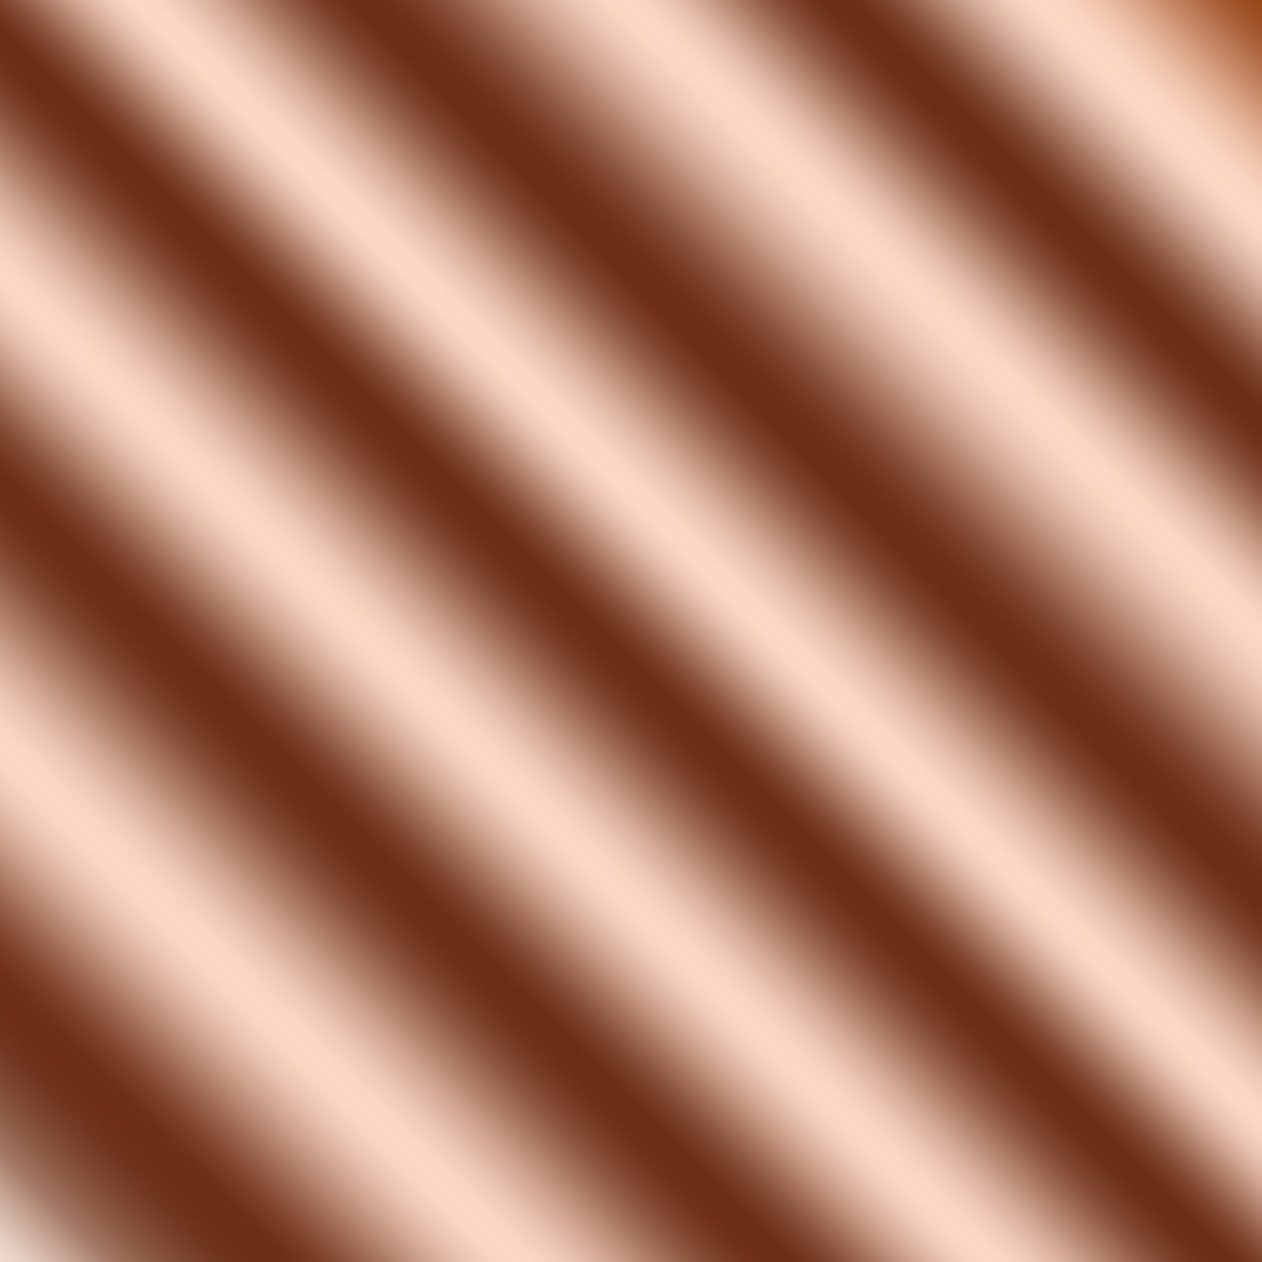 1262x1262 Parallax wallpaper 4k Pattern Background Abstract iPad Wallpaper 1262x1262 pixels resolution